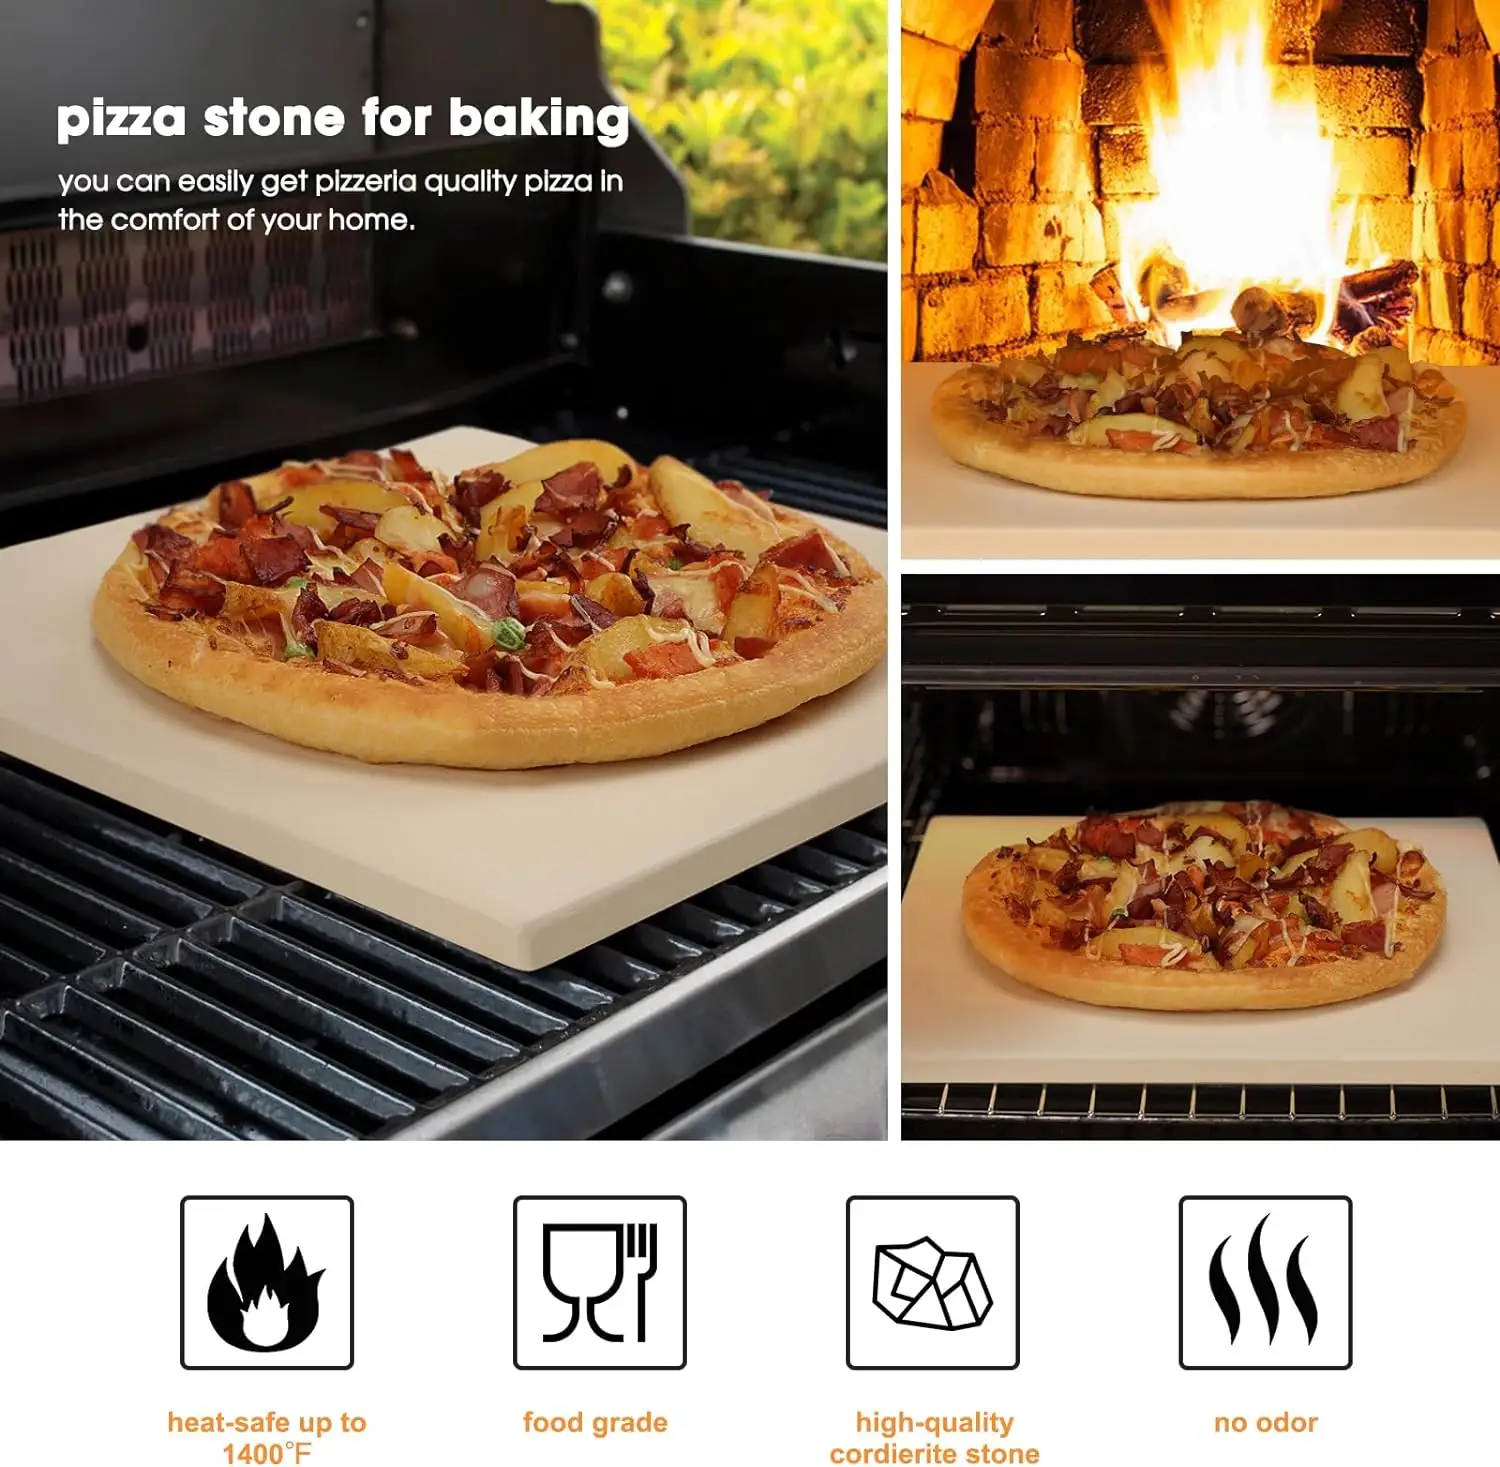 Piedra de cerámica cuadrada resistente al calor para Pizza, piedra de Pizza refractaria Rectangular para horno de Pizza